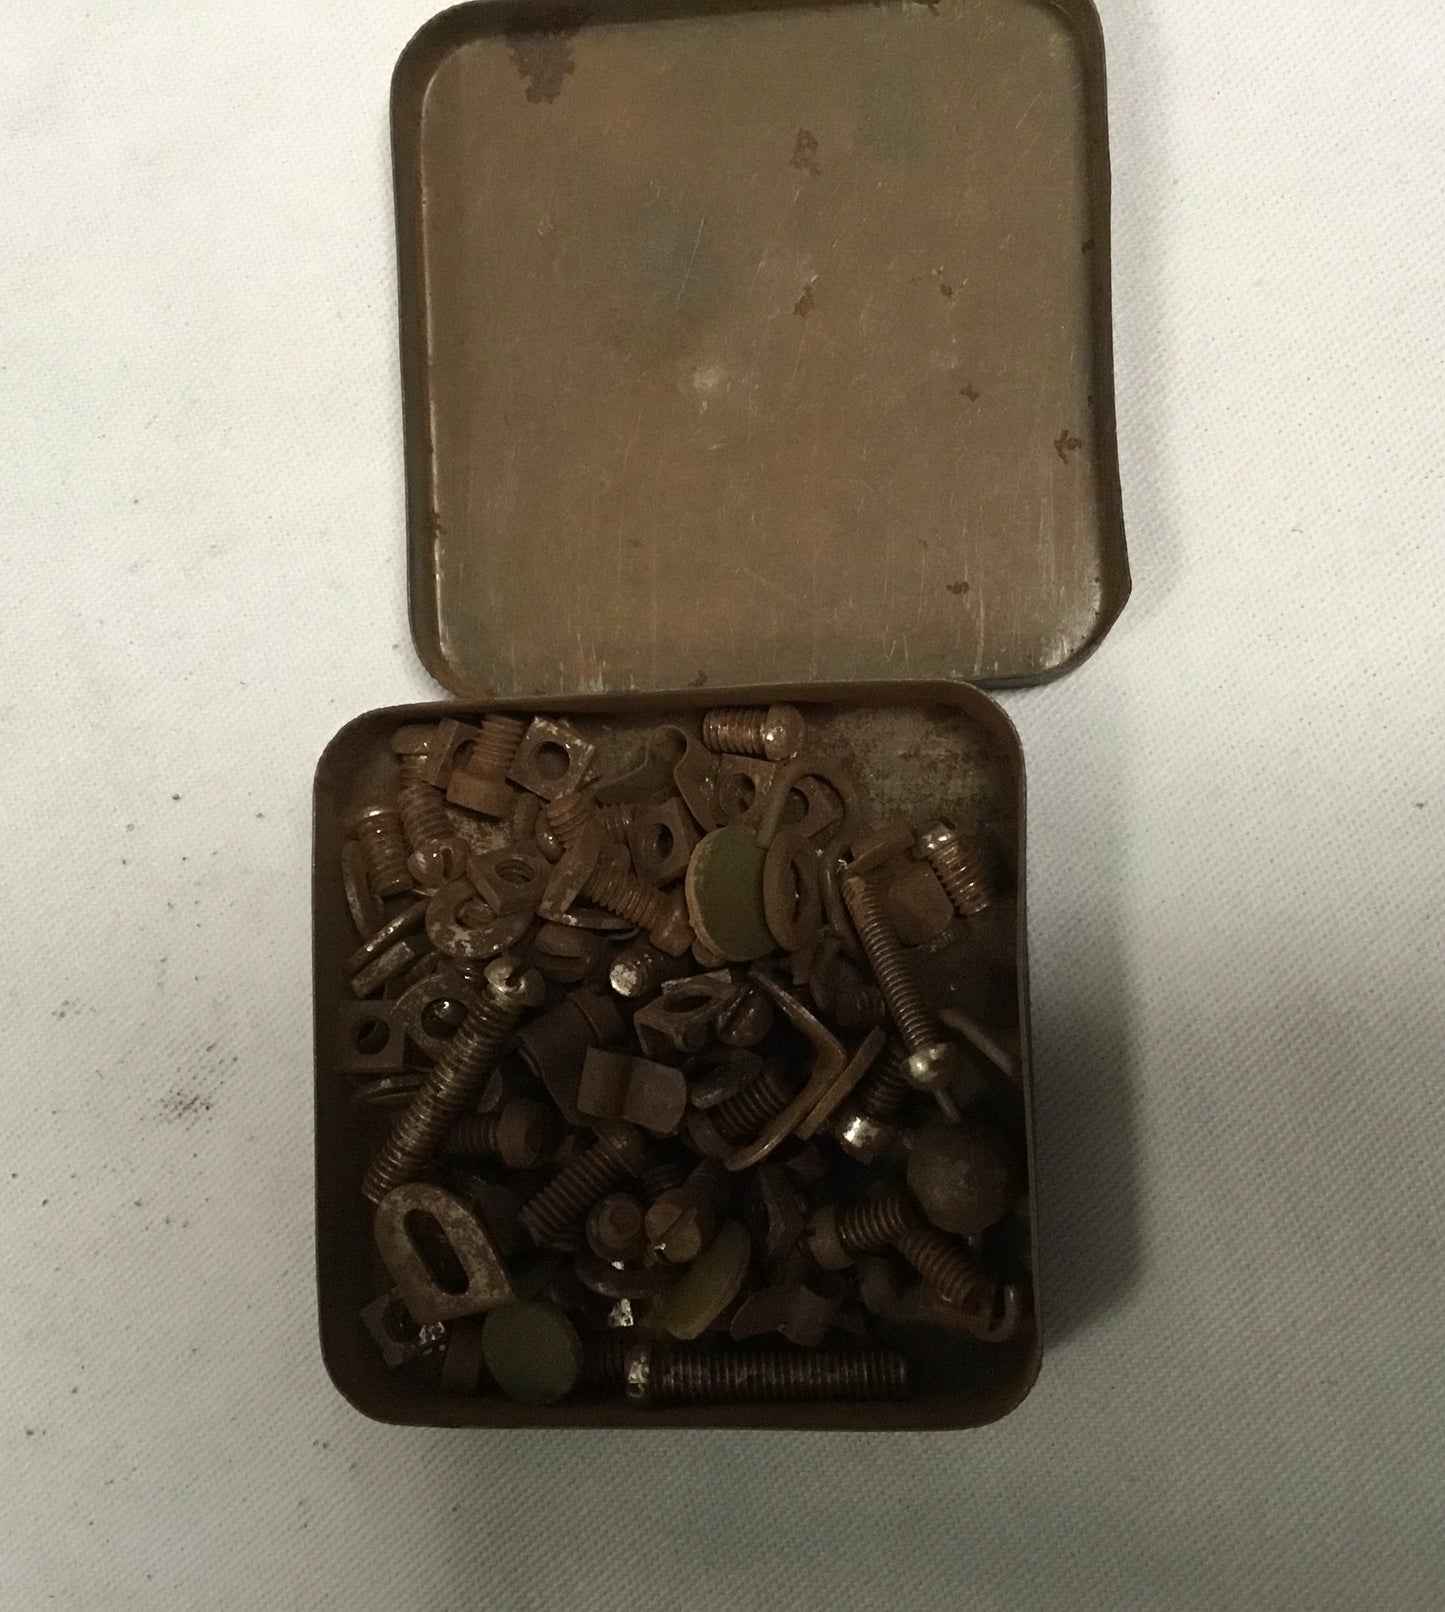 1920s Vintage Rare Meccano Small Parts Tin Box with Contents